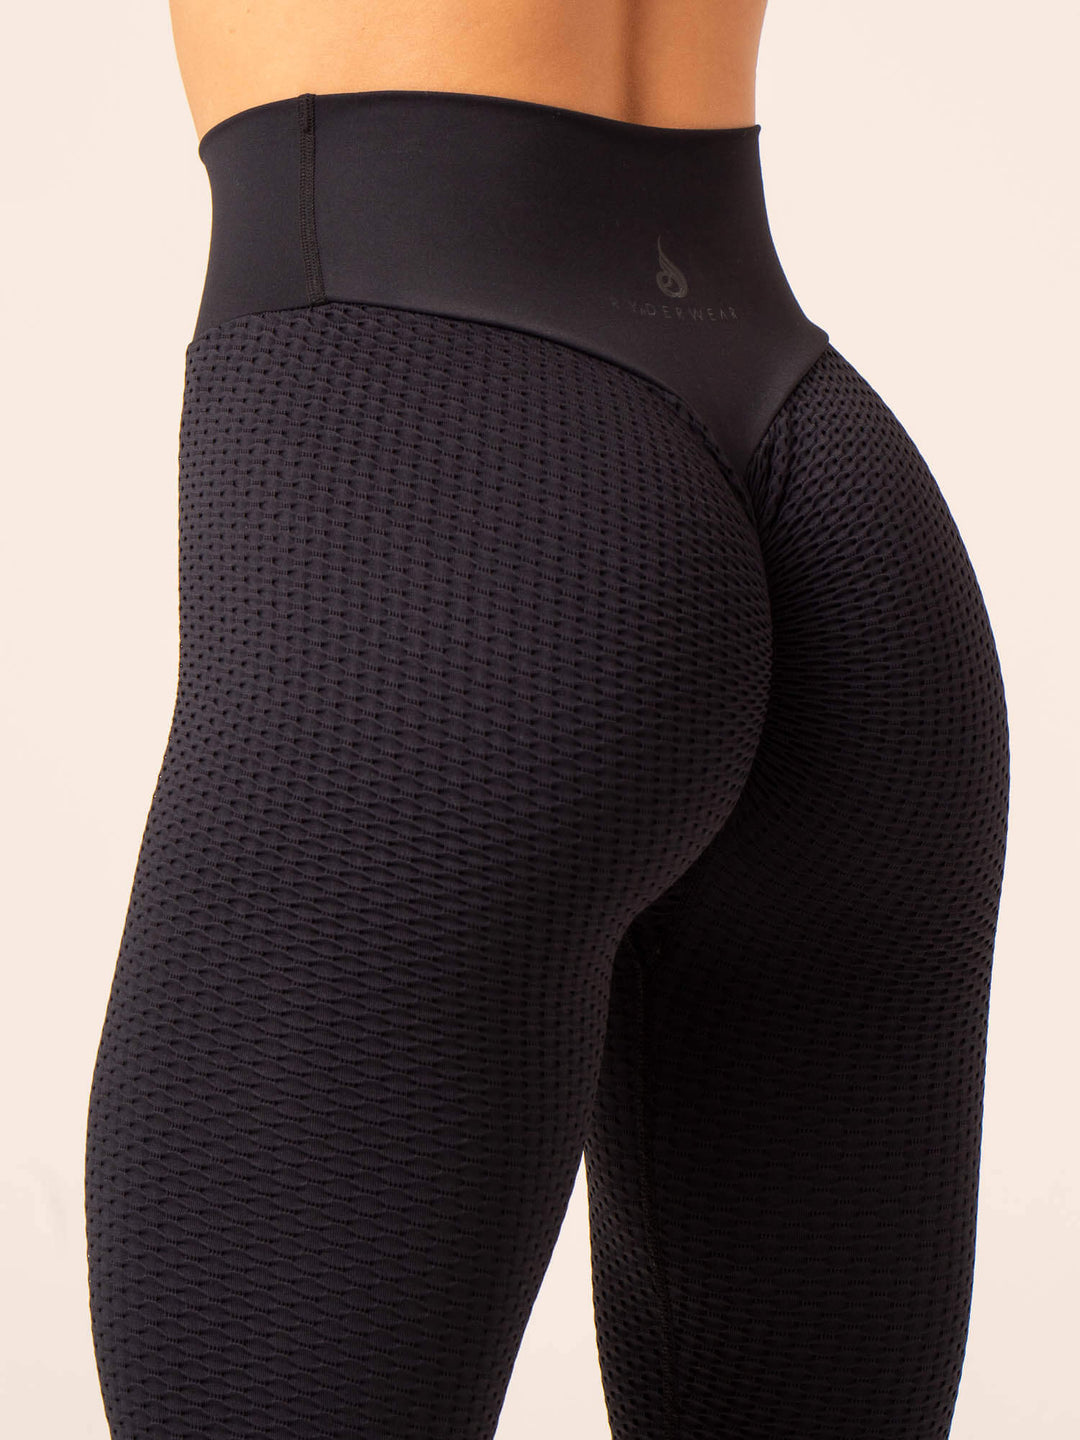 Honeycomb Scrunch Seamless Leggings - Black - Ryderwear